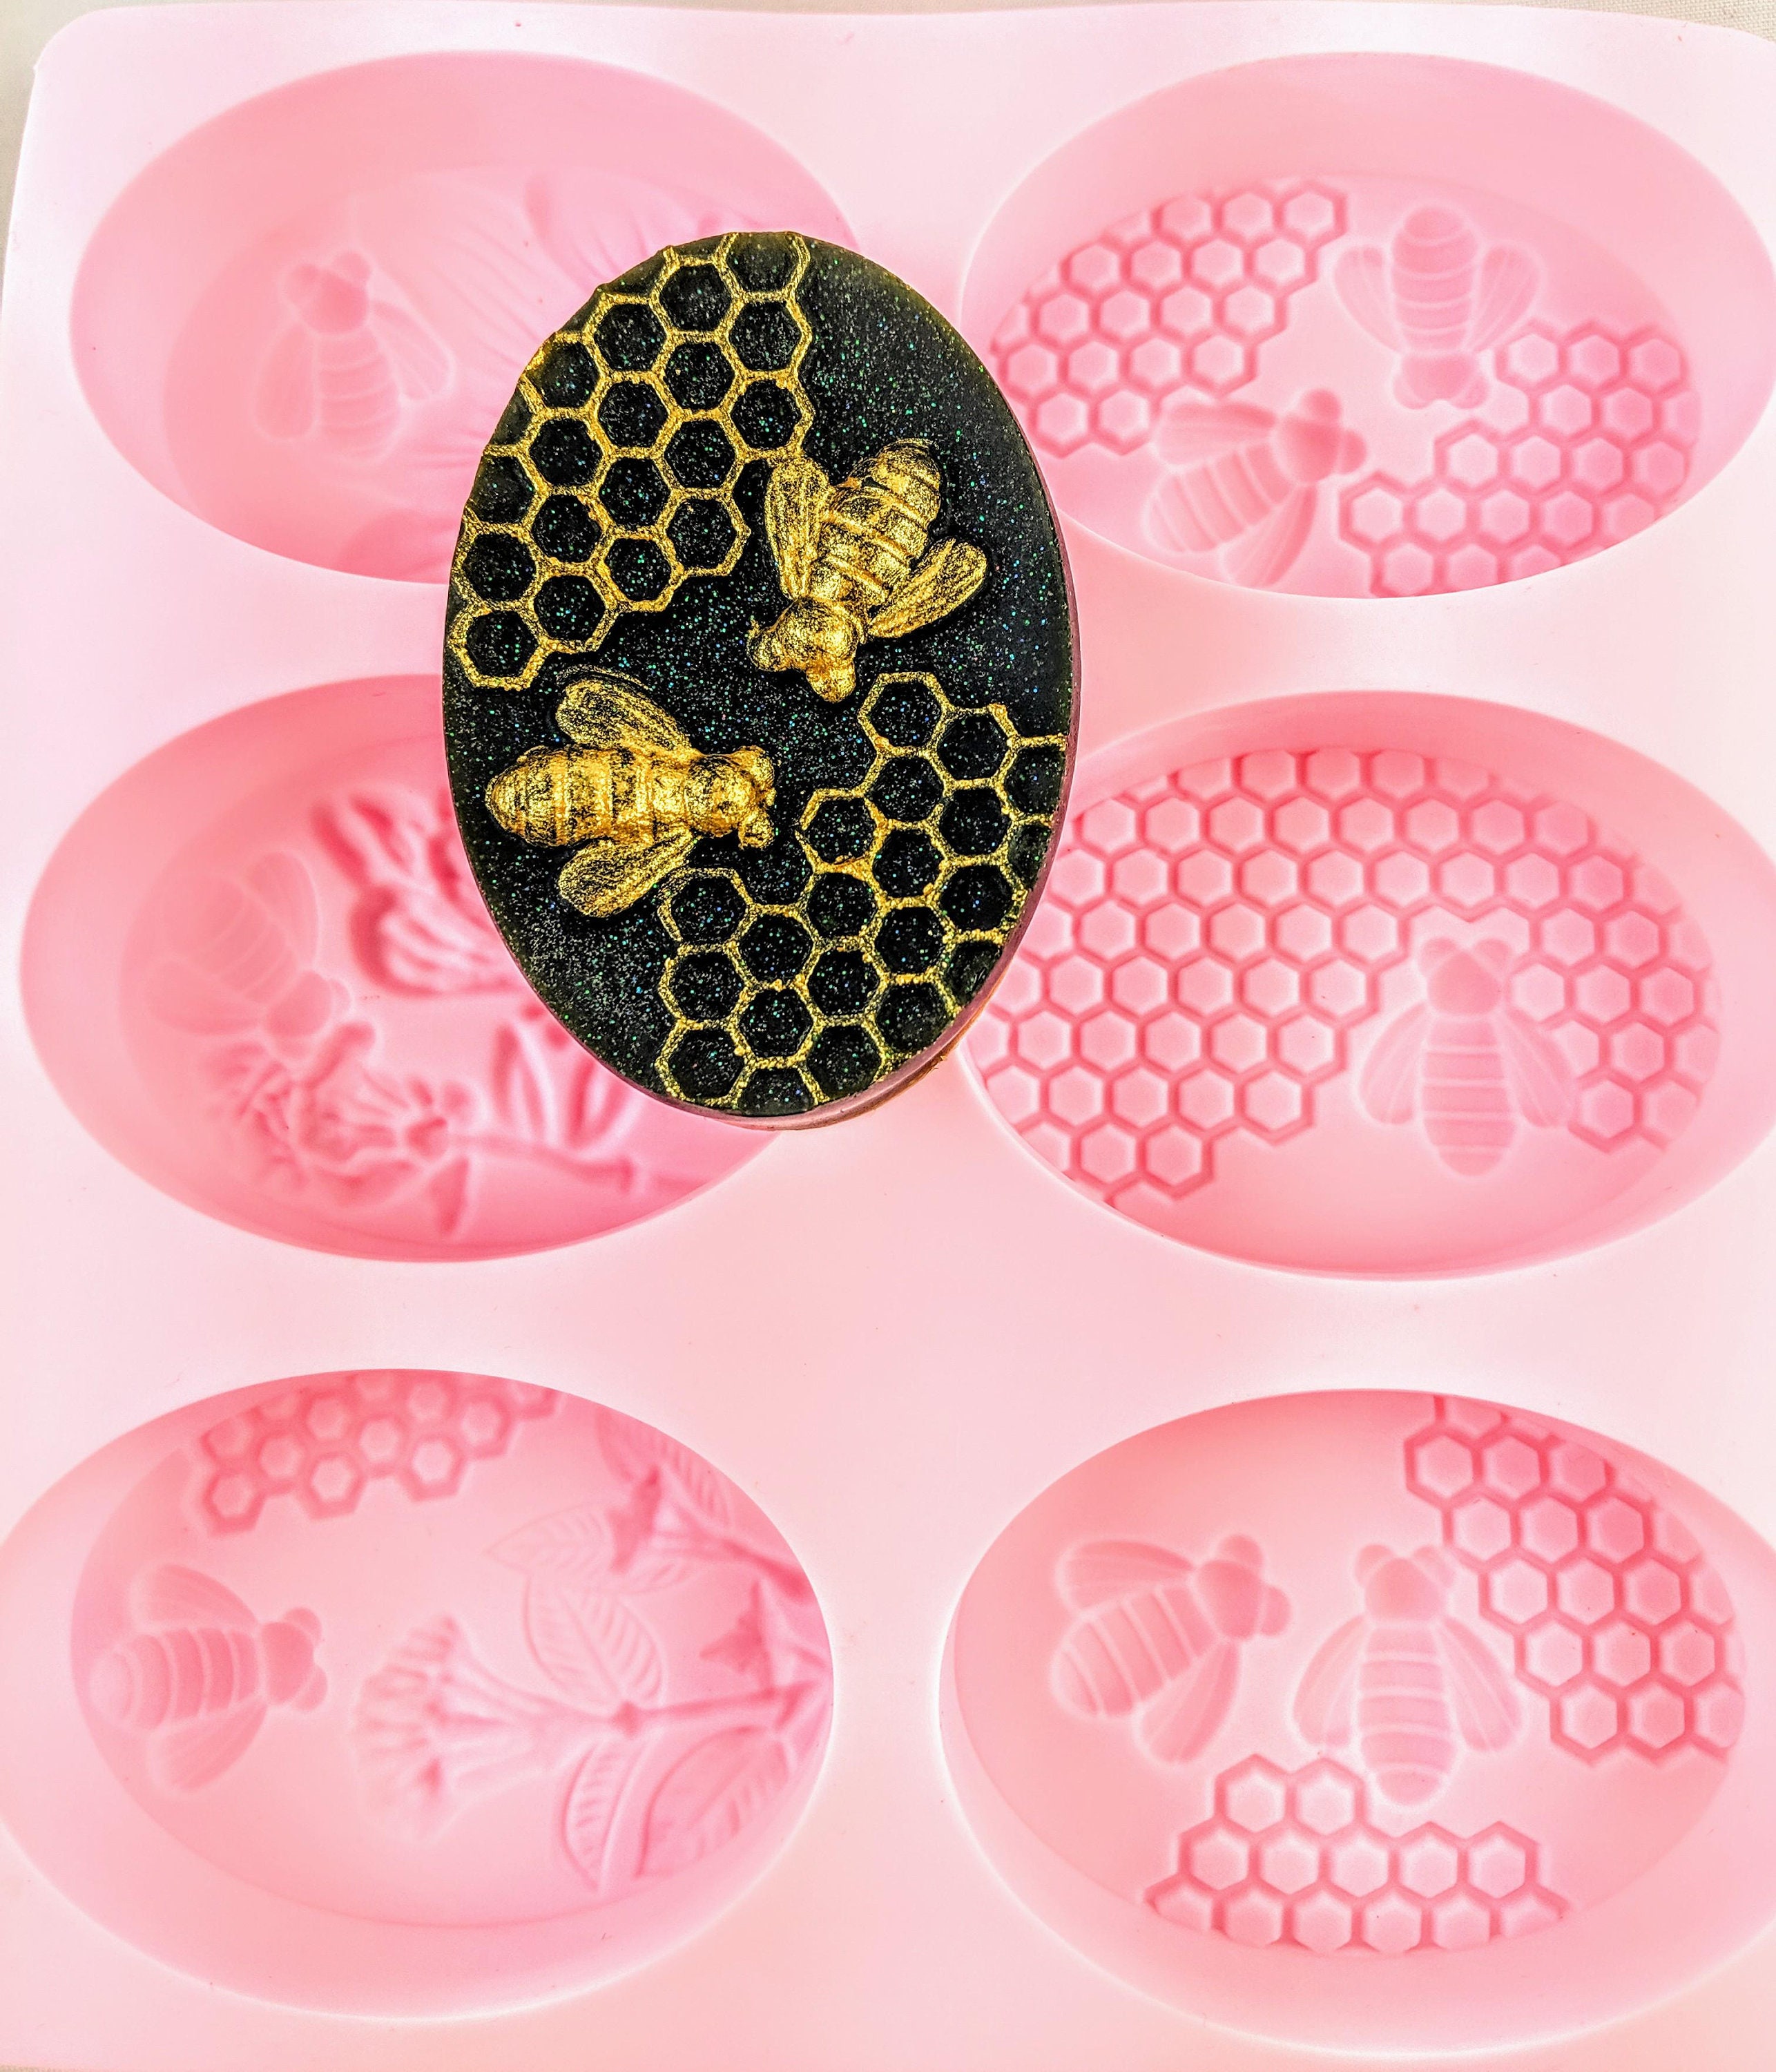 6 Cavity Bee Honeycomb Silicone Cake Mold Household Baking Manual